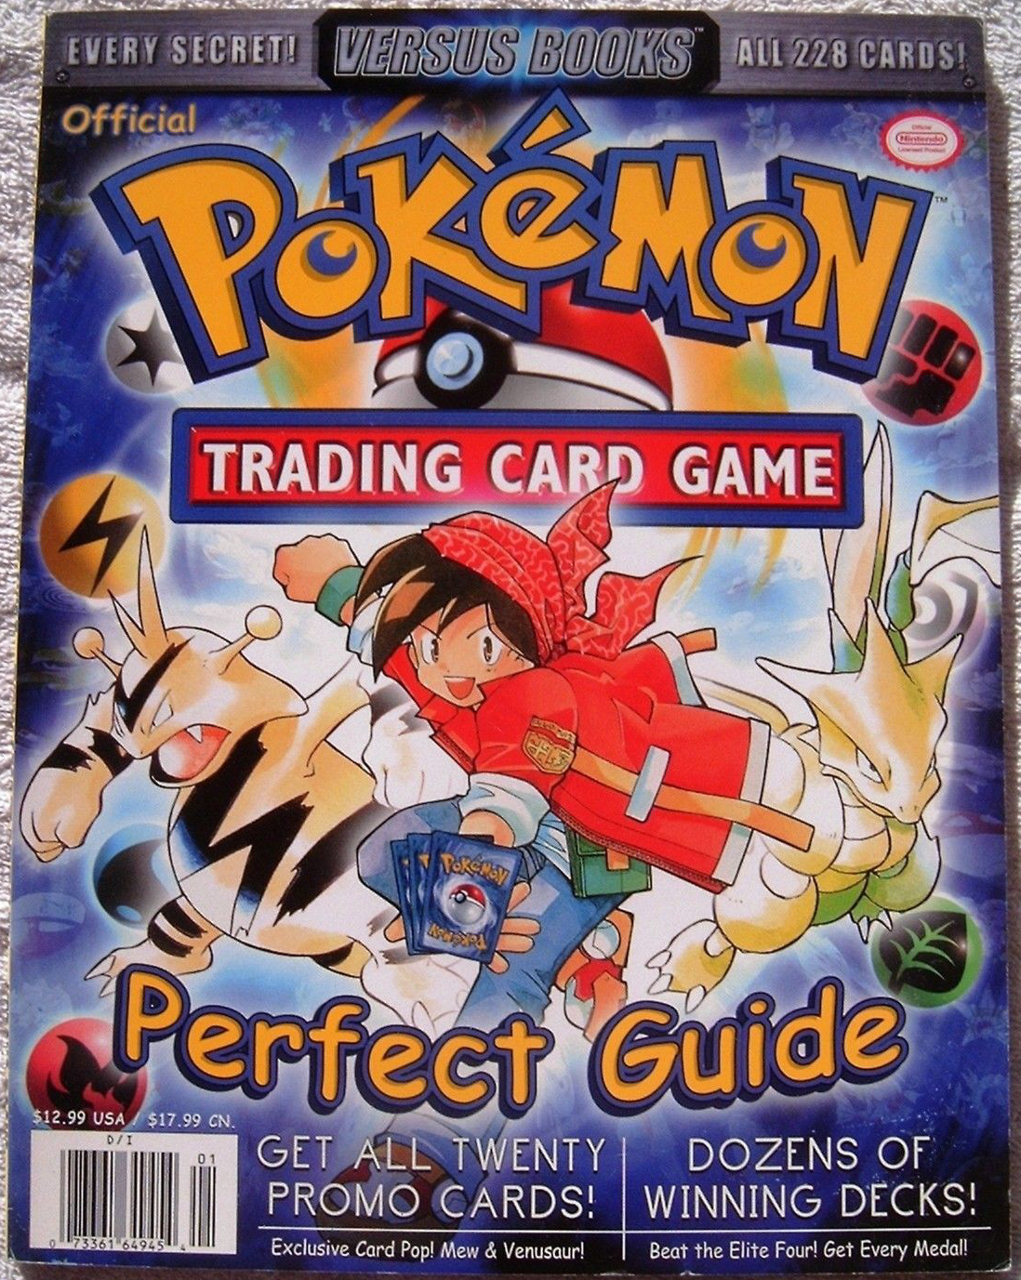 Pokémon Trading Card Game, Software